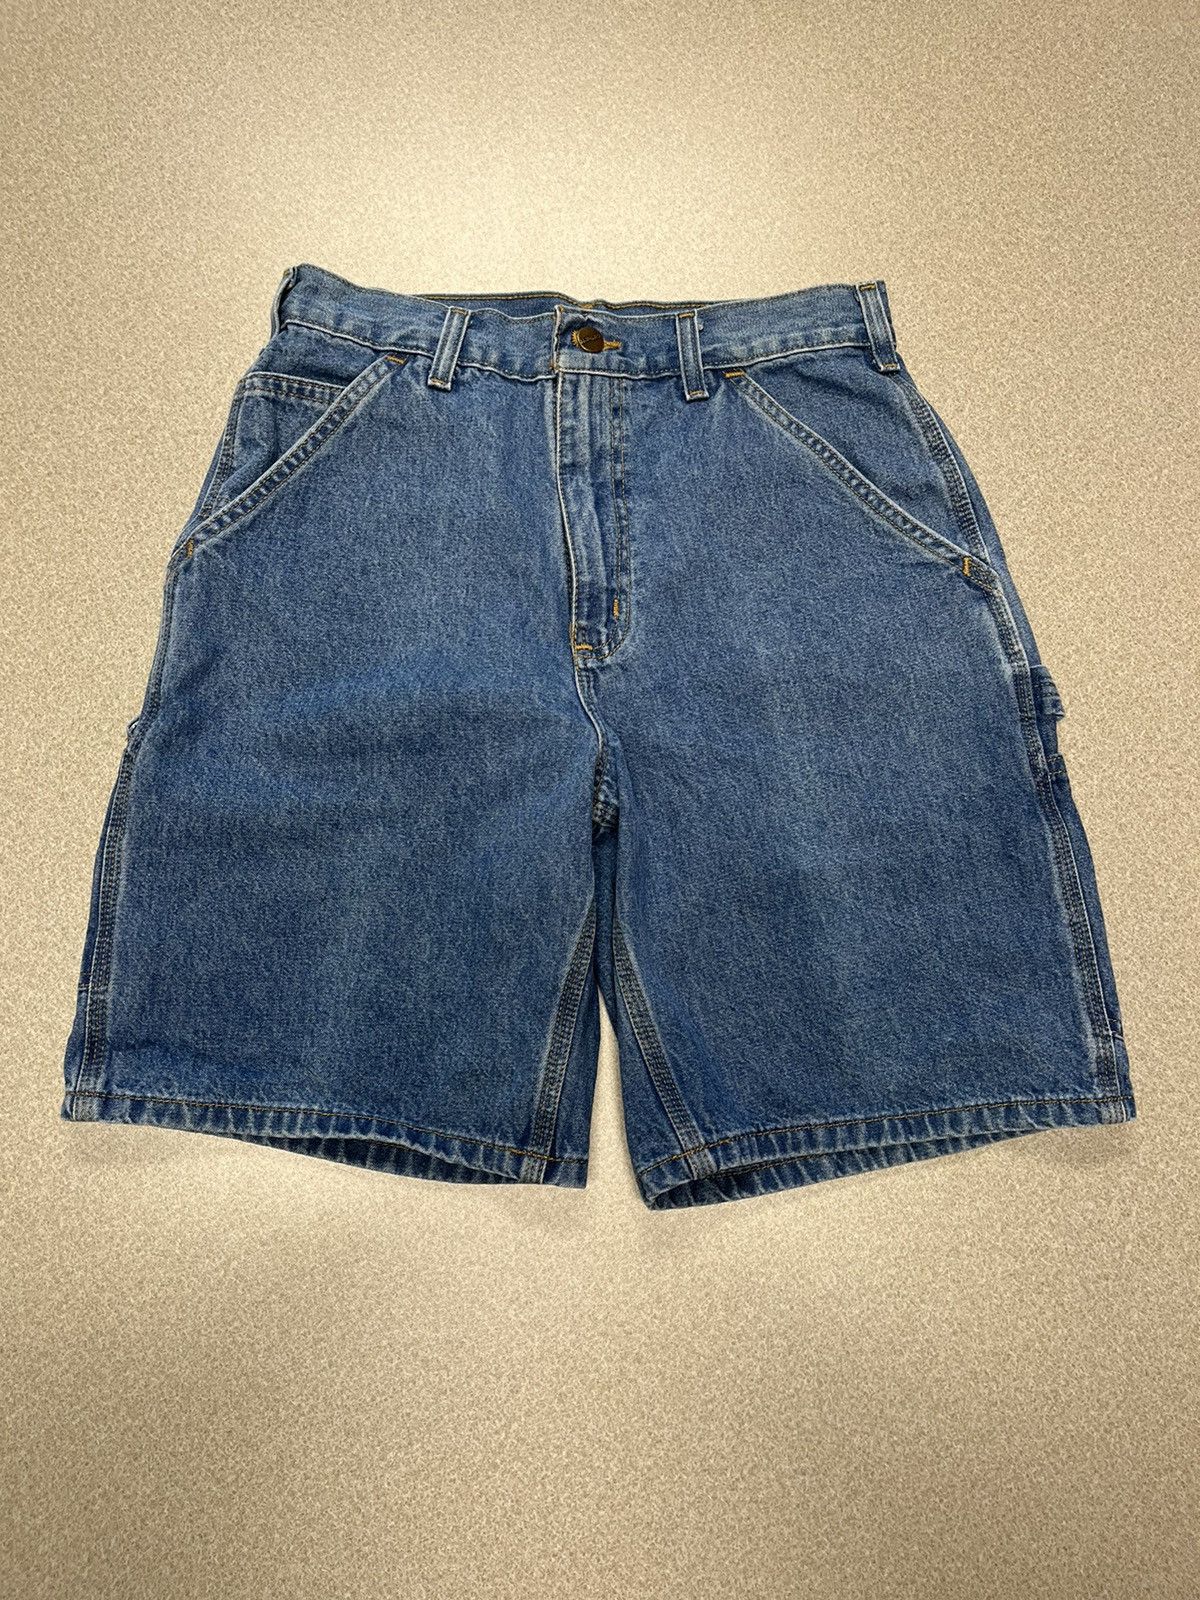 Vintage Vintage Carhartt Denim Shorts (Jorts) - Size 30 Size US 30 / EU 46 - 2 Preview